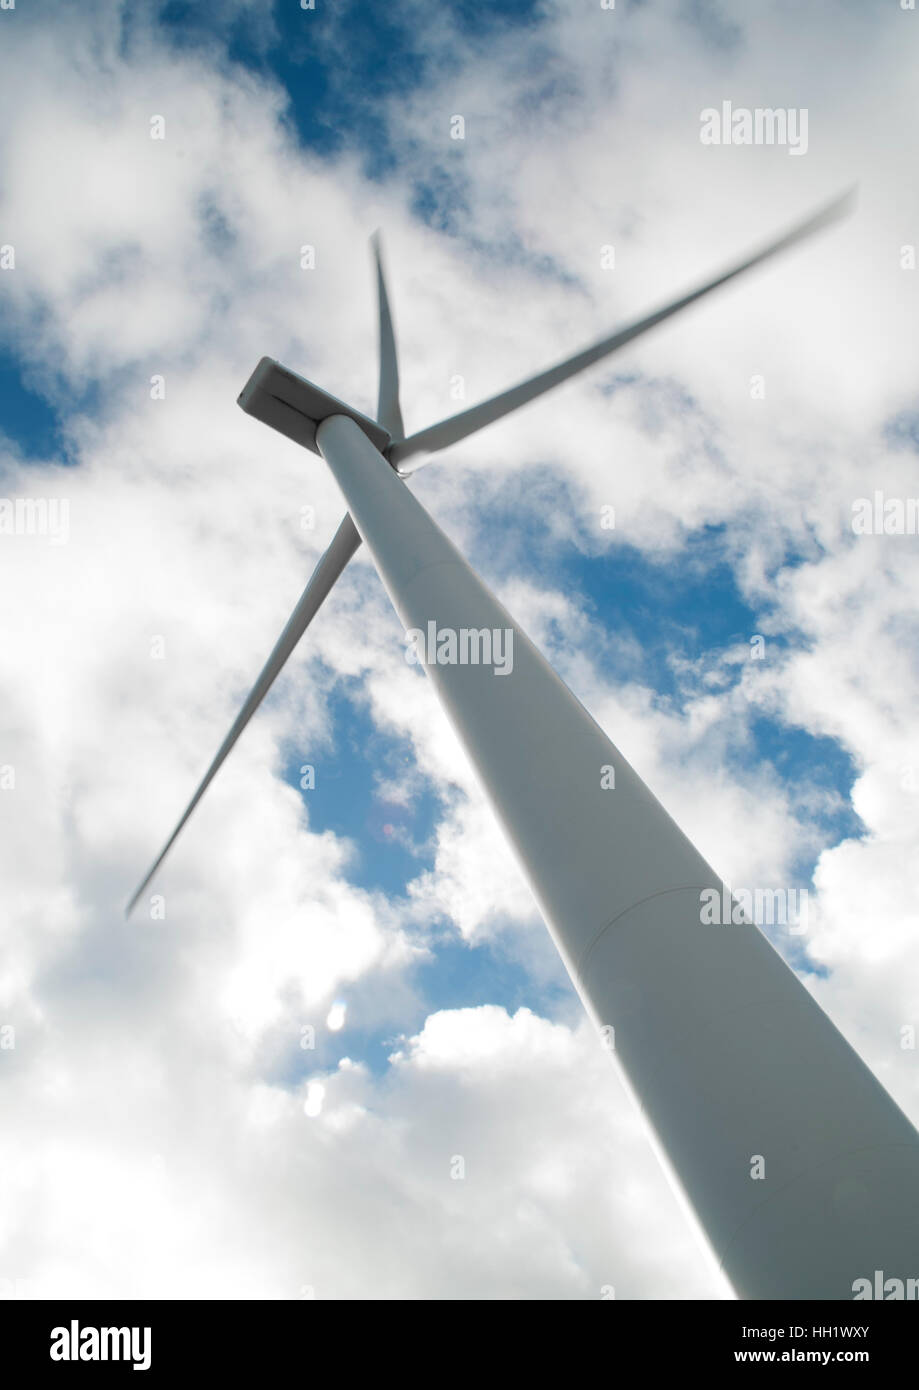 wind turbine at work Stock Photo